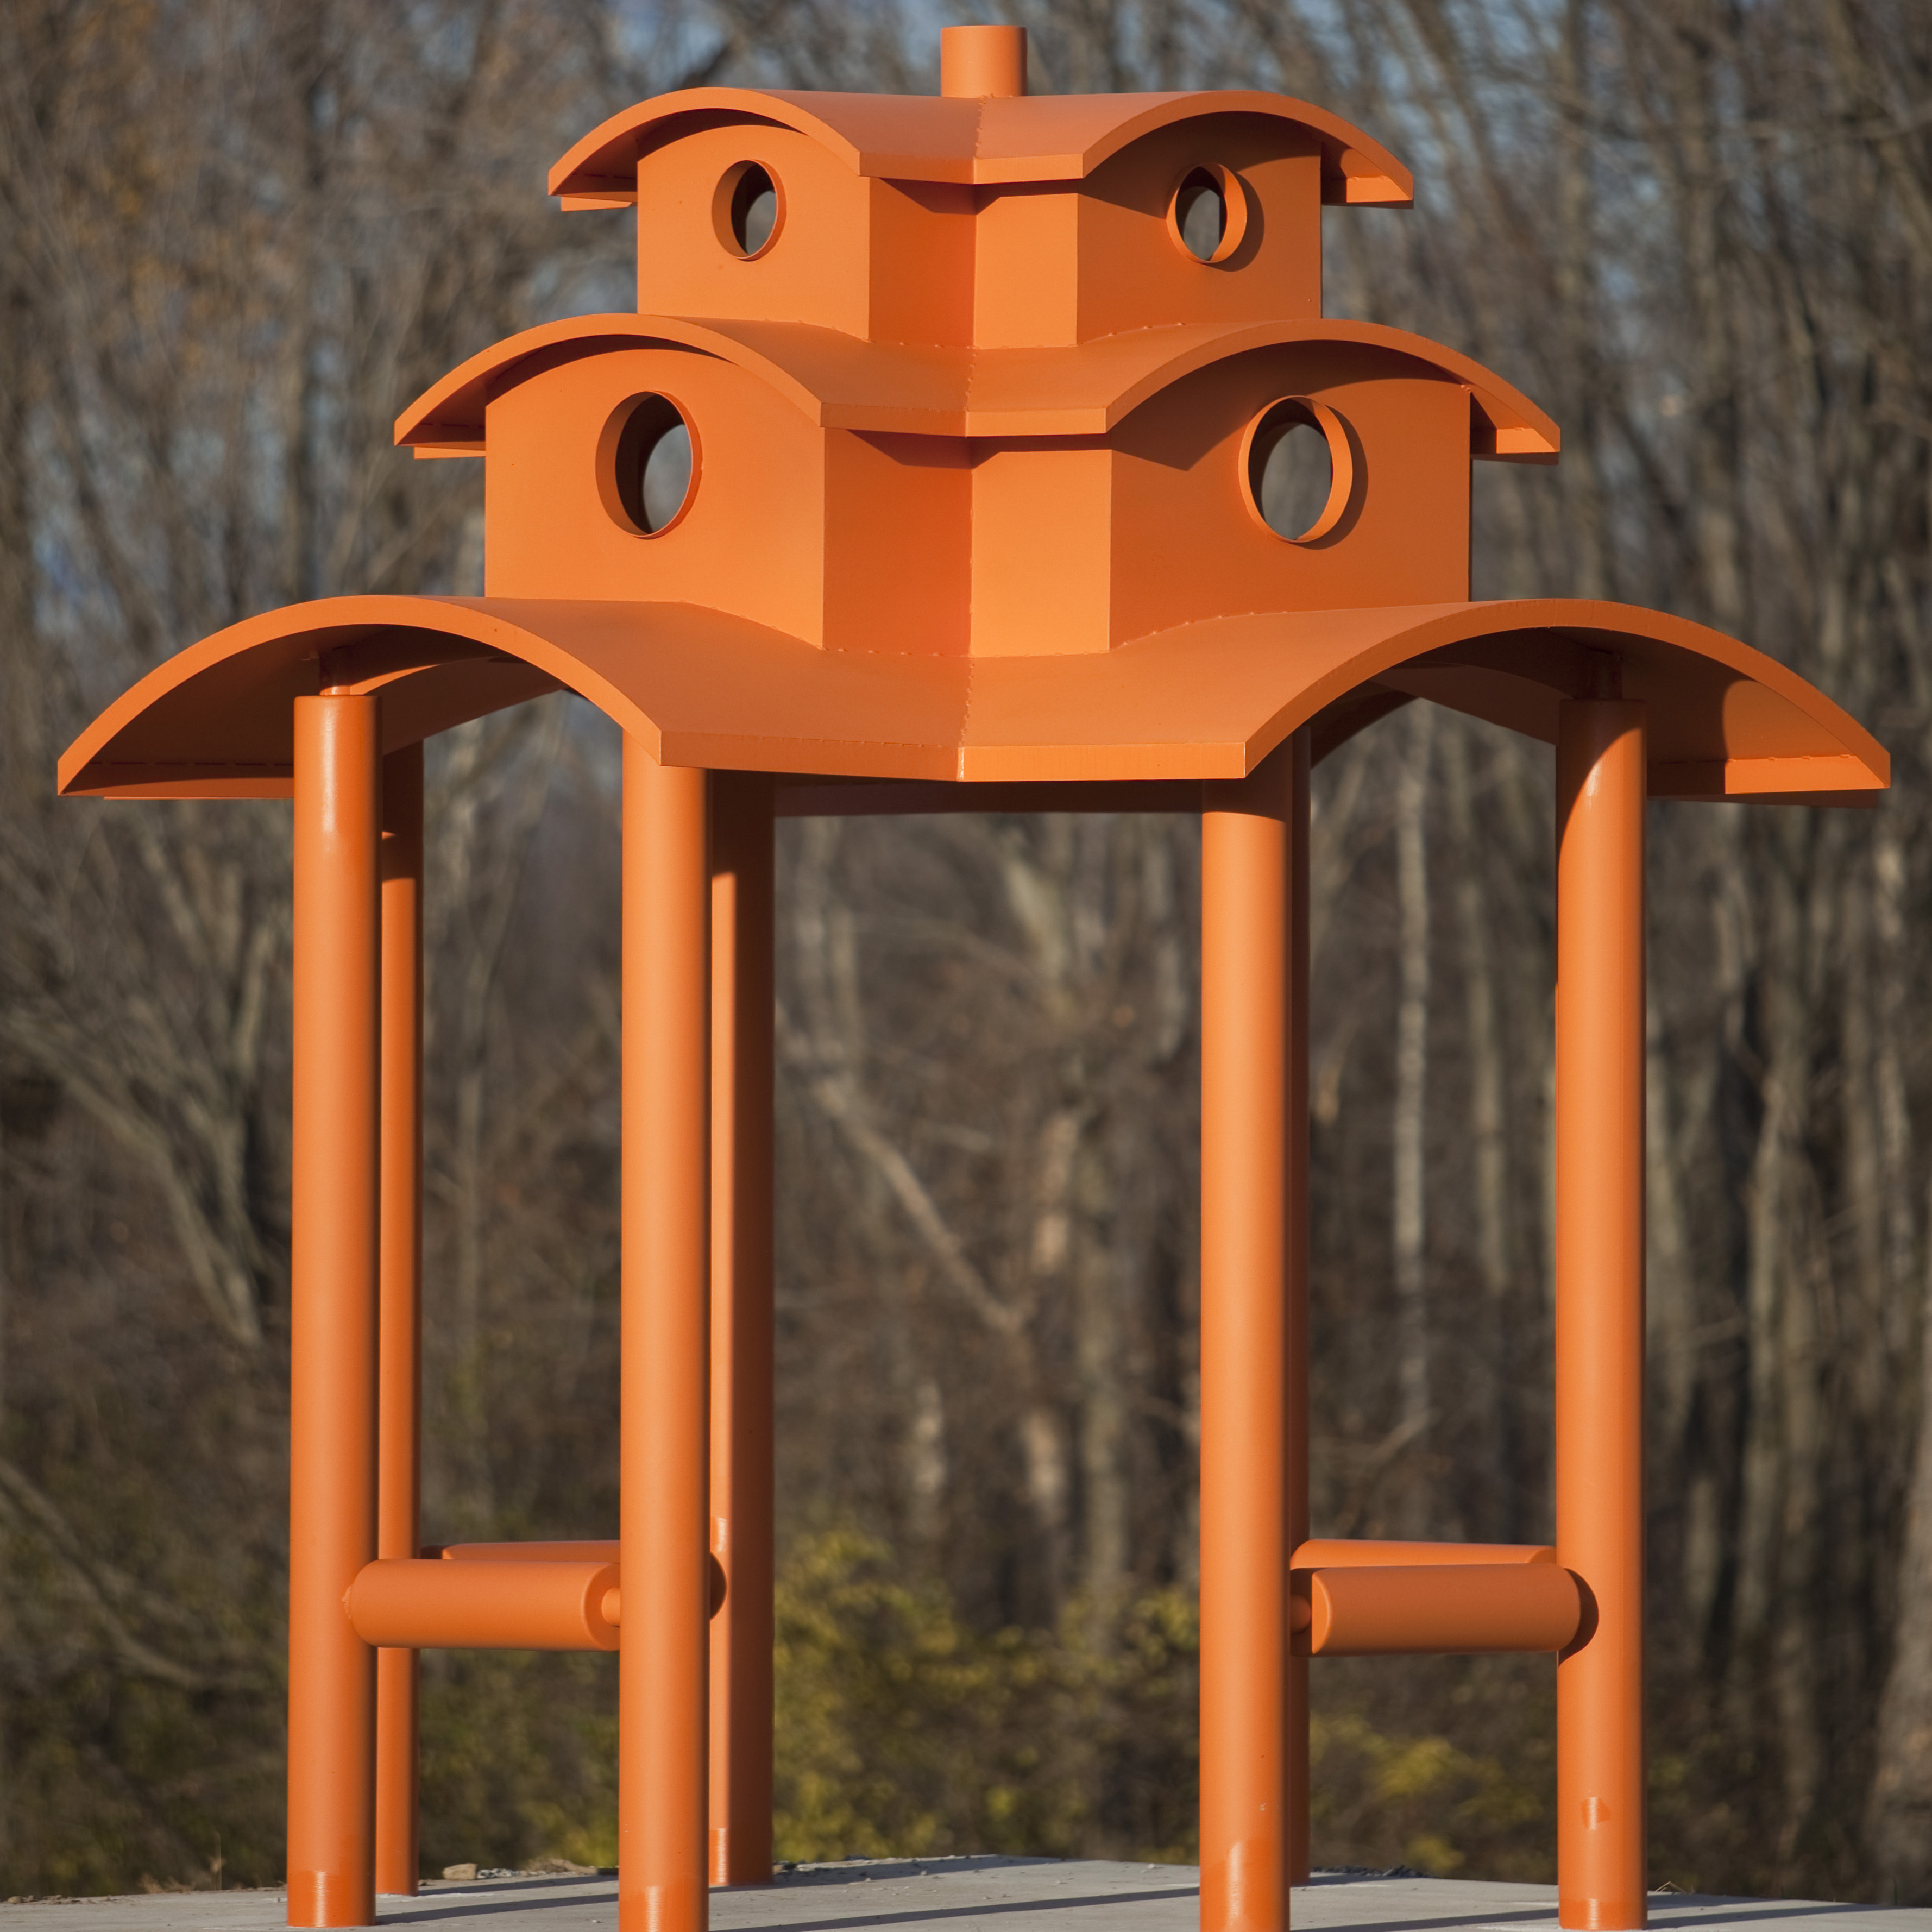 an orange gazebo-inspired sculpture